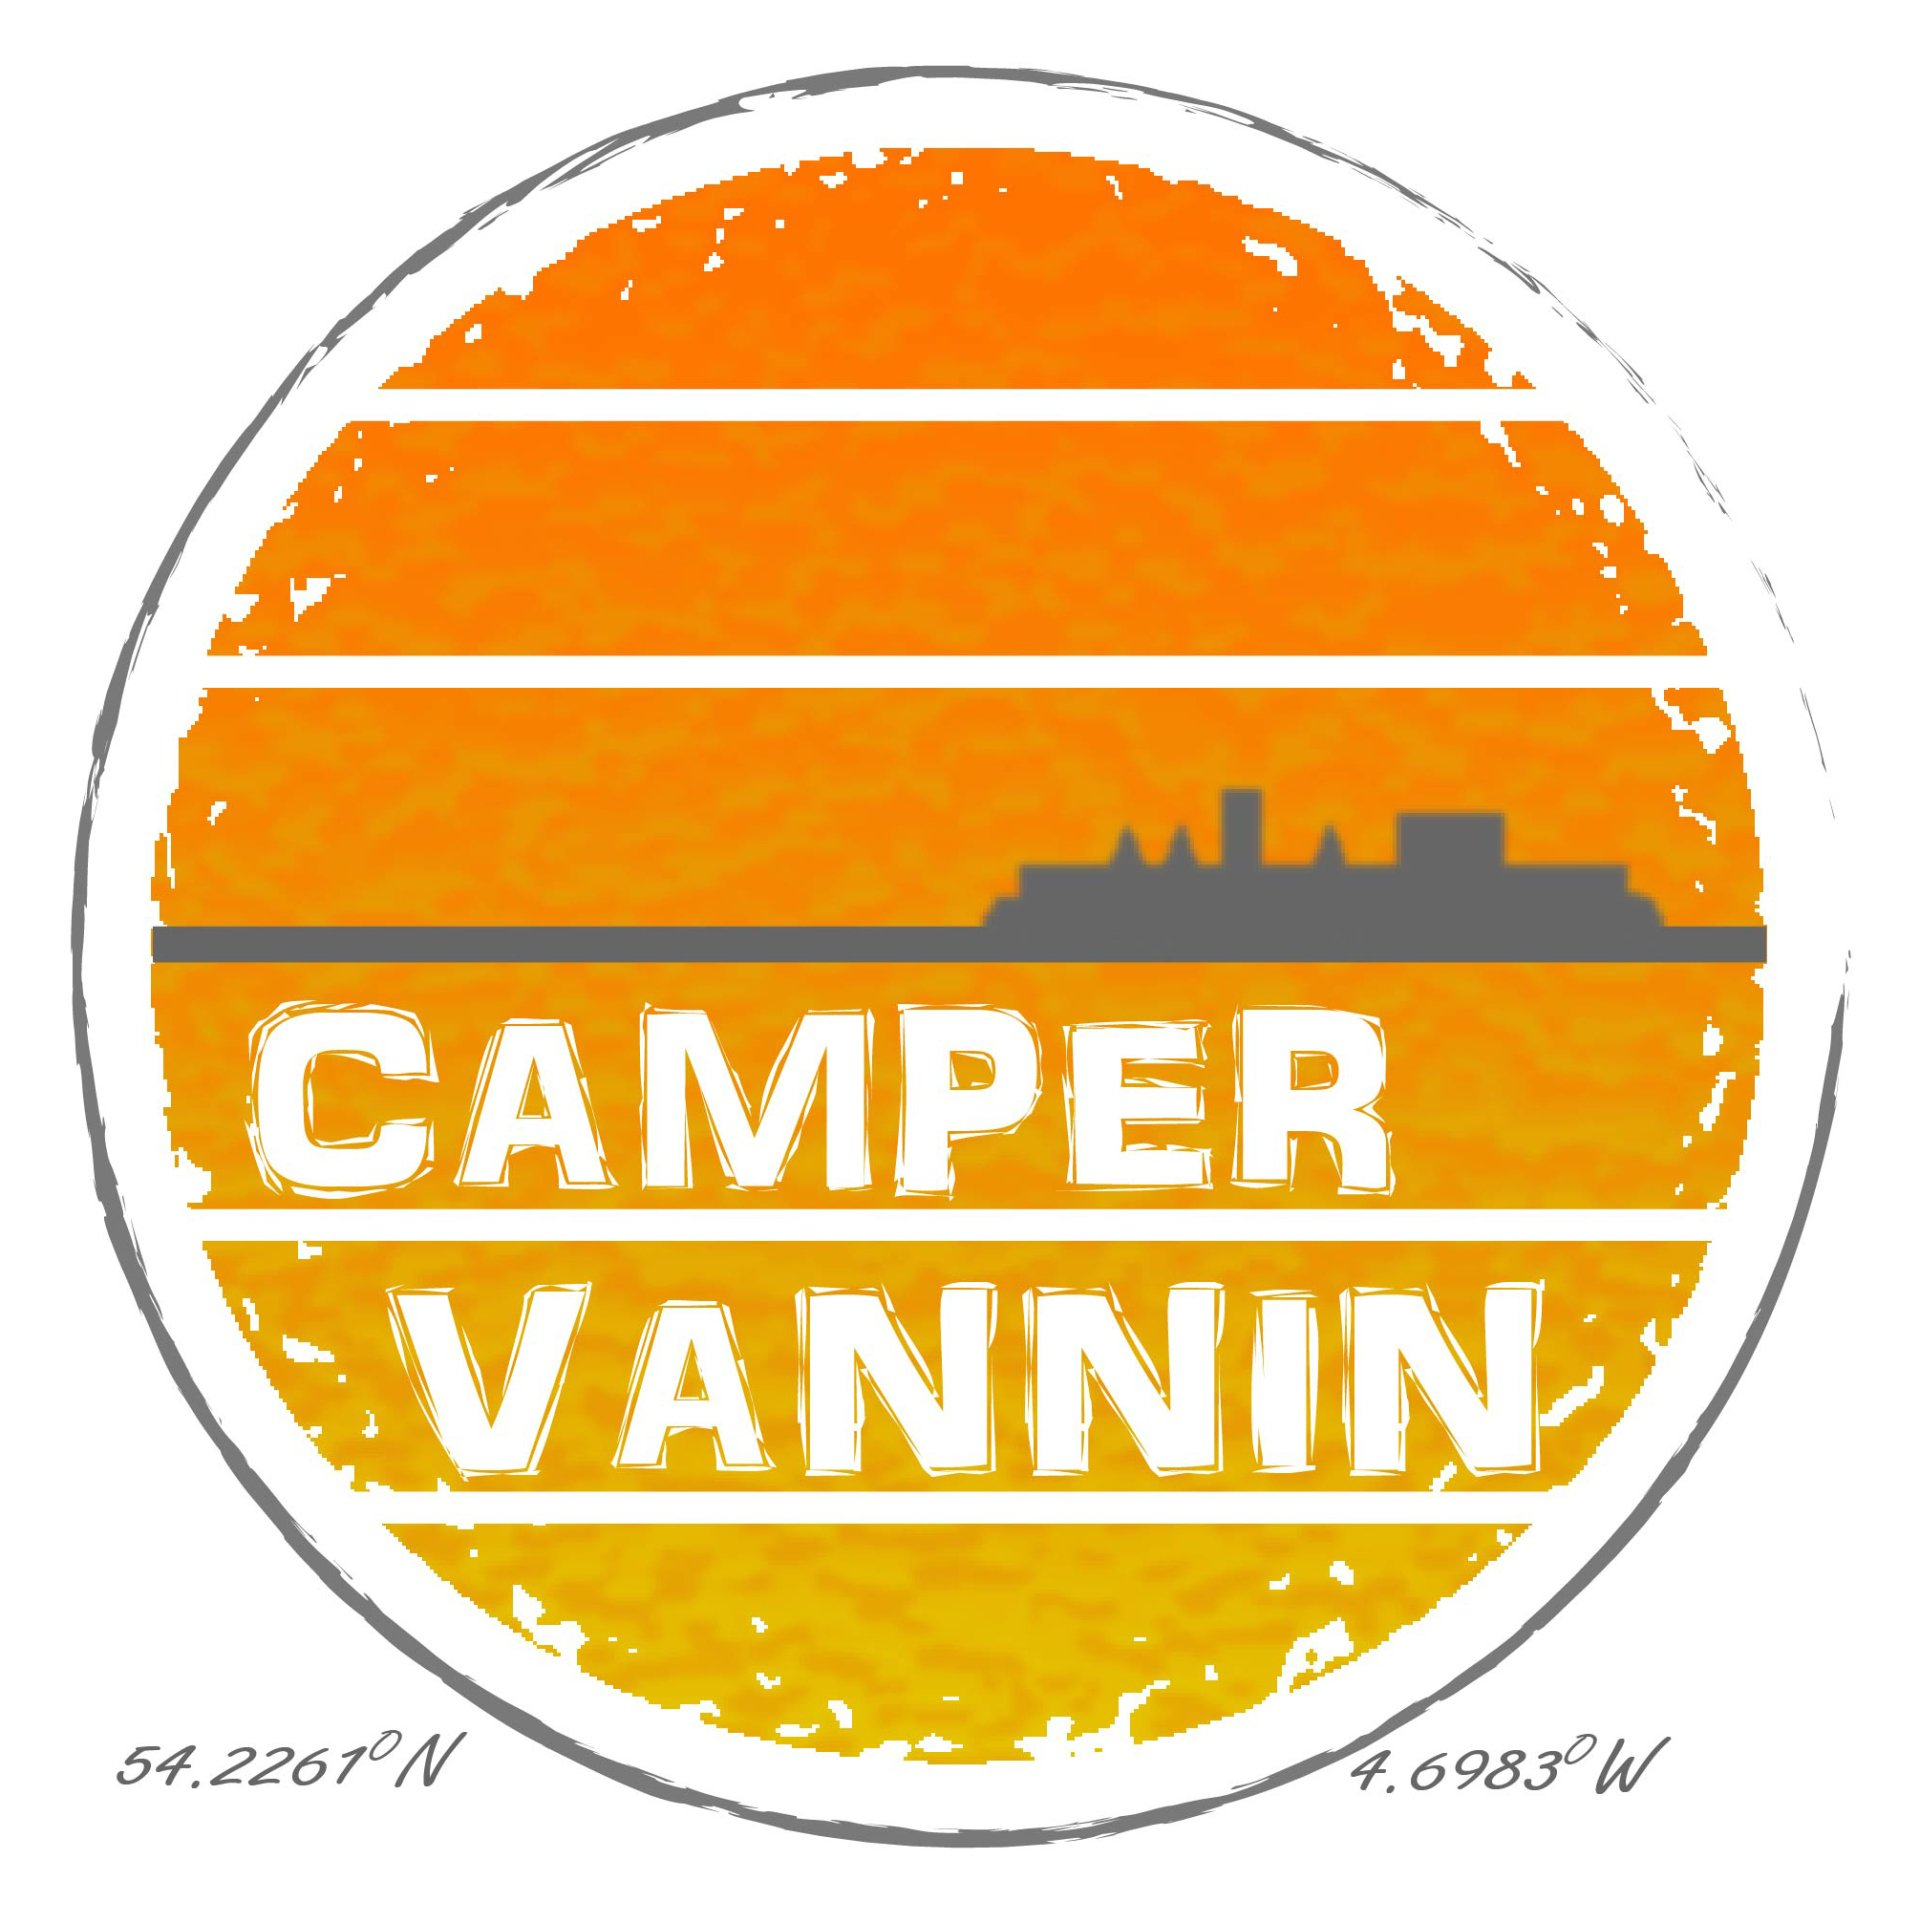 Camper Vannin - VW camper van for hire